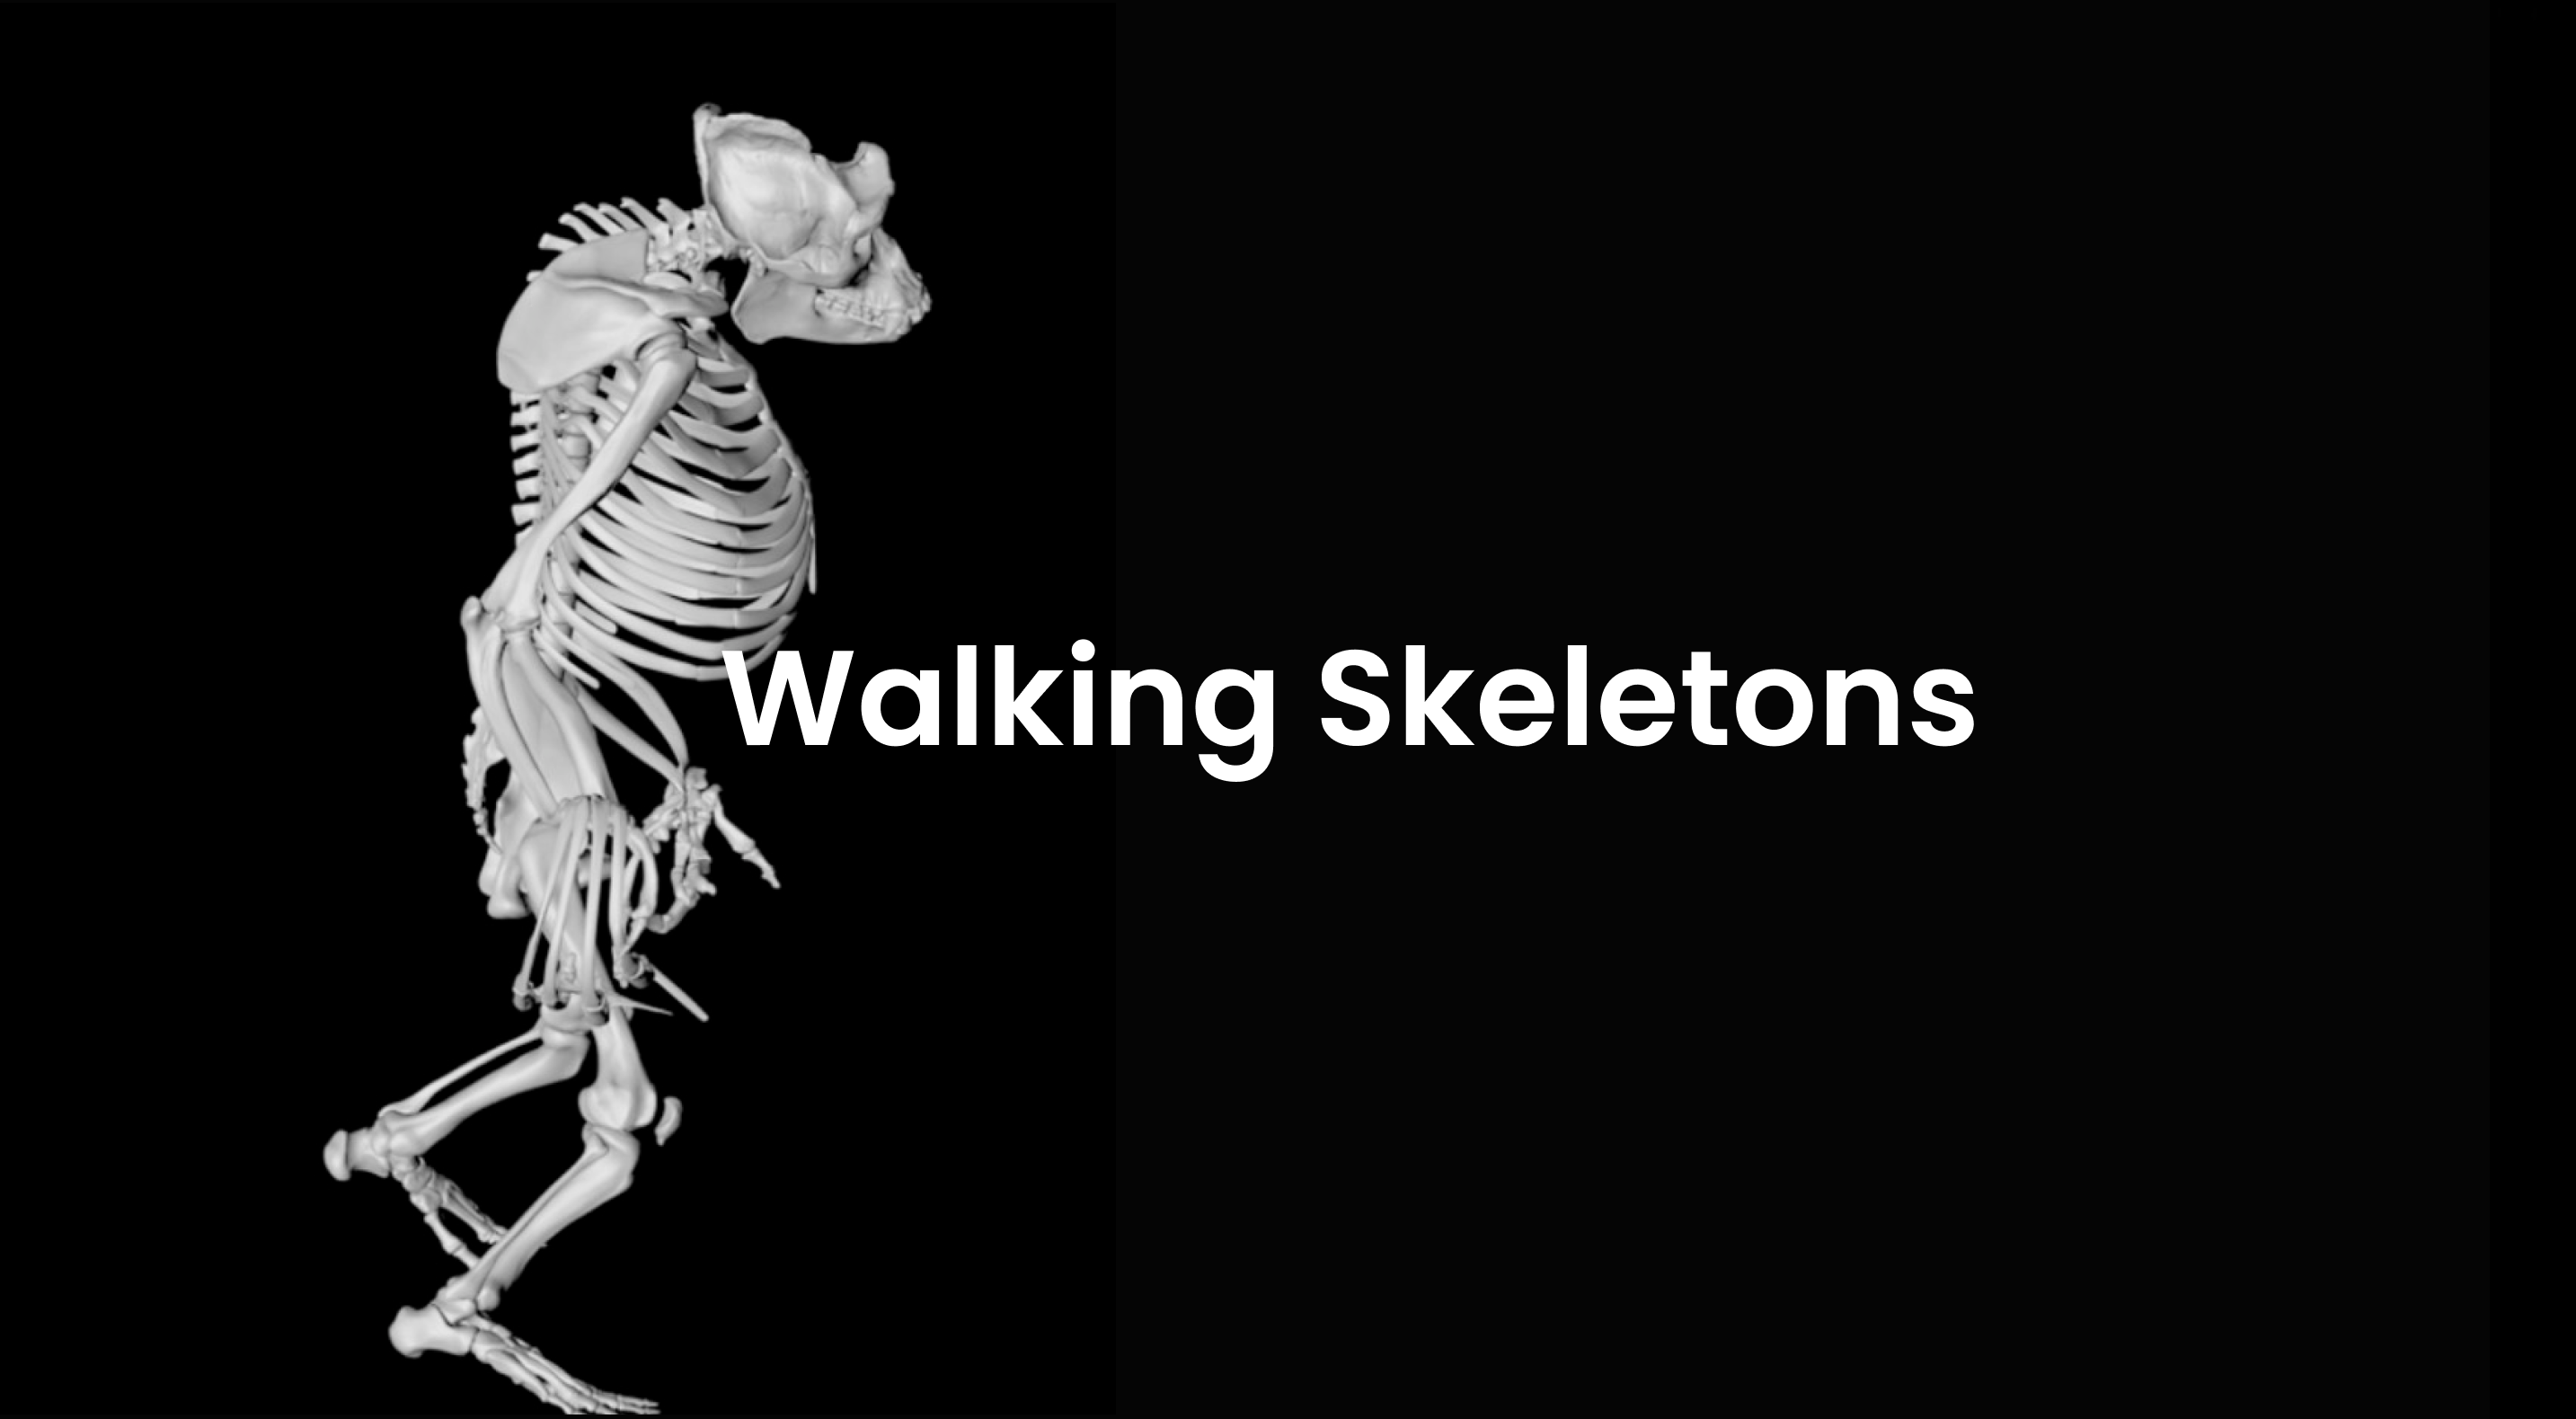 Walking Skeletons Halloween Digital Decorations for Haunted House